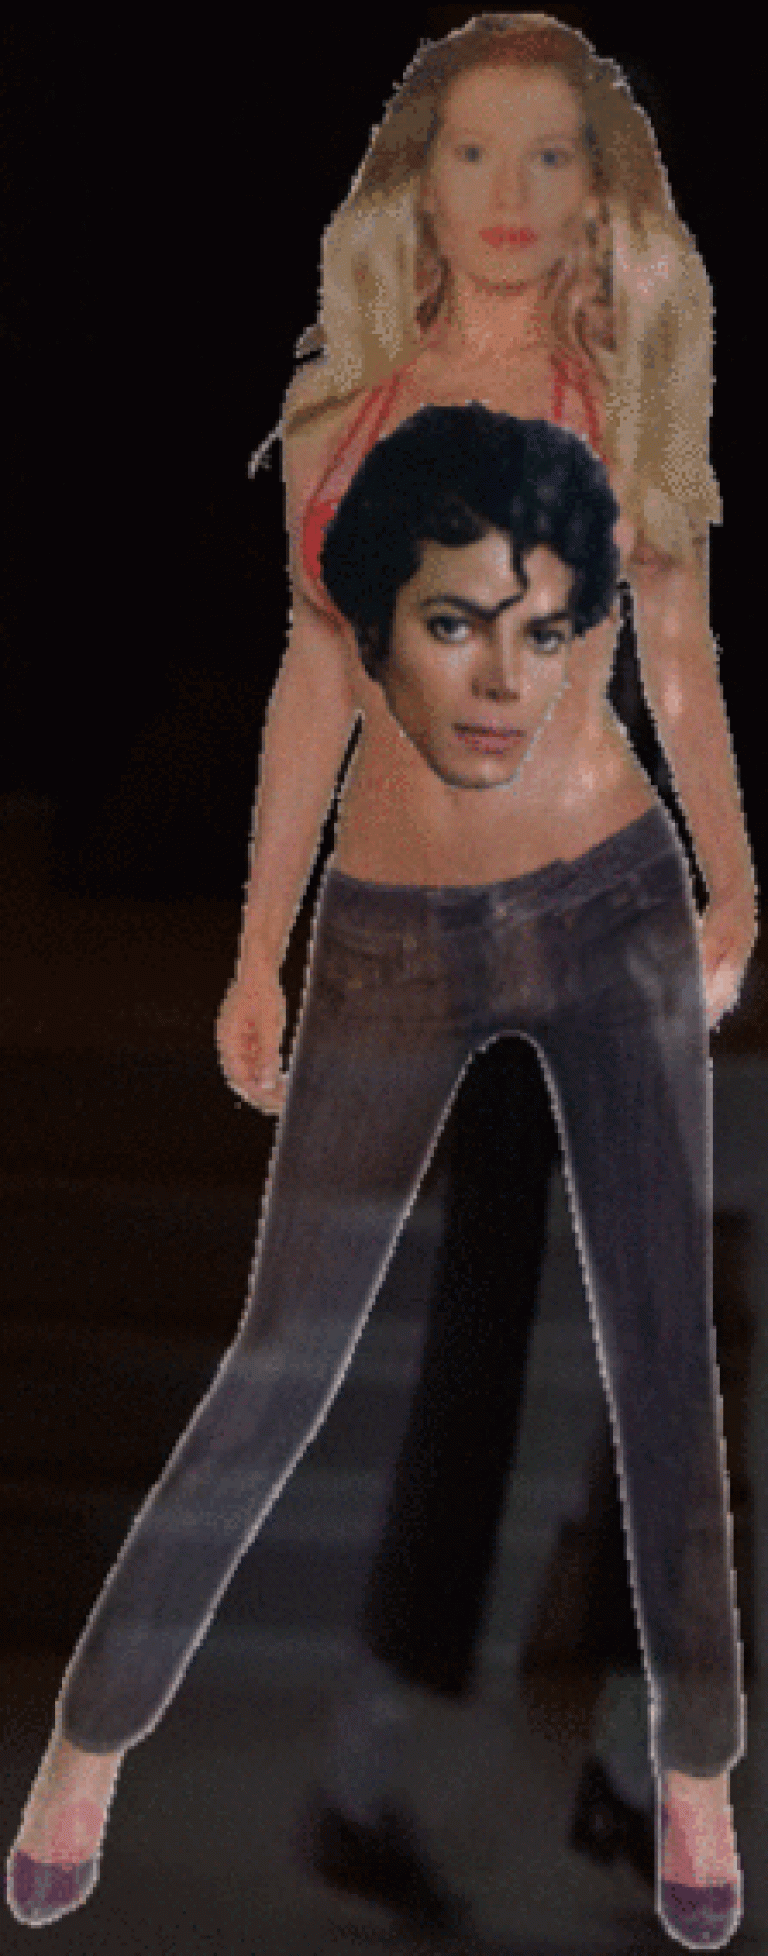 Michael Jackson – THE King of Music